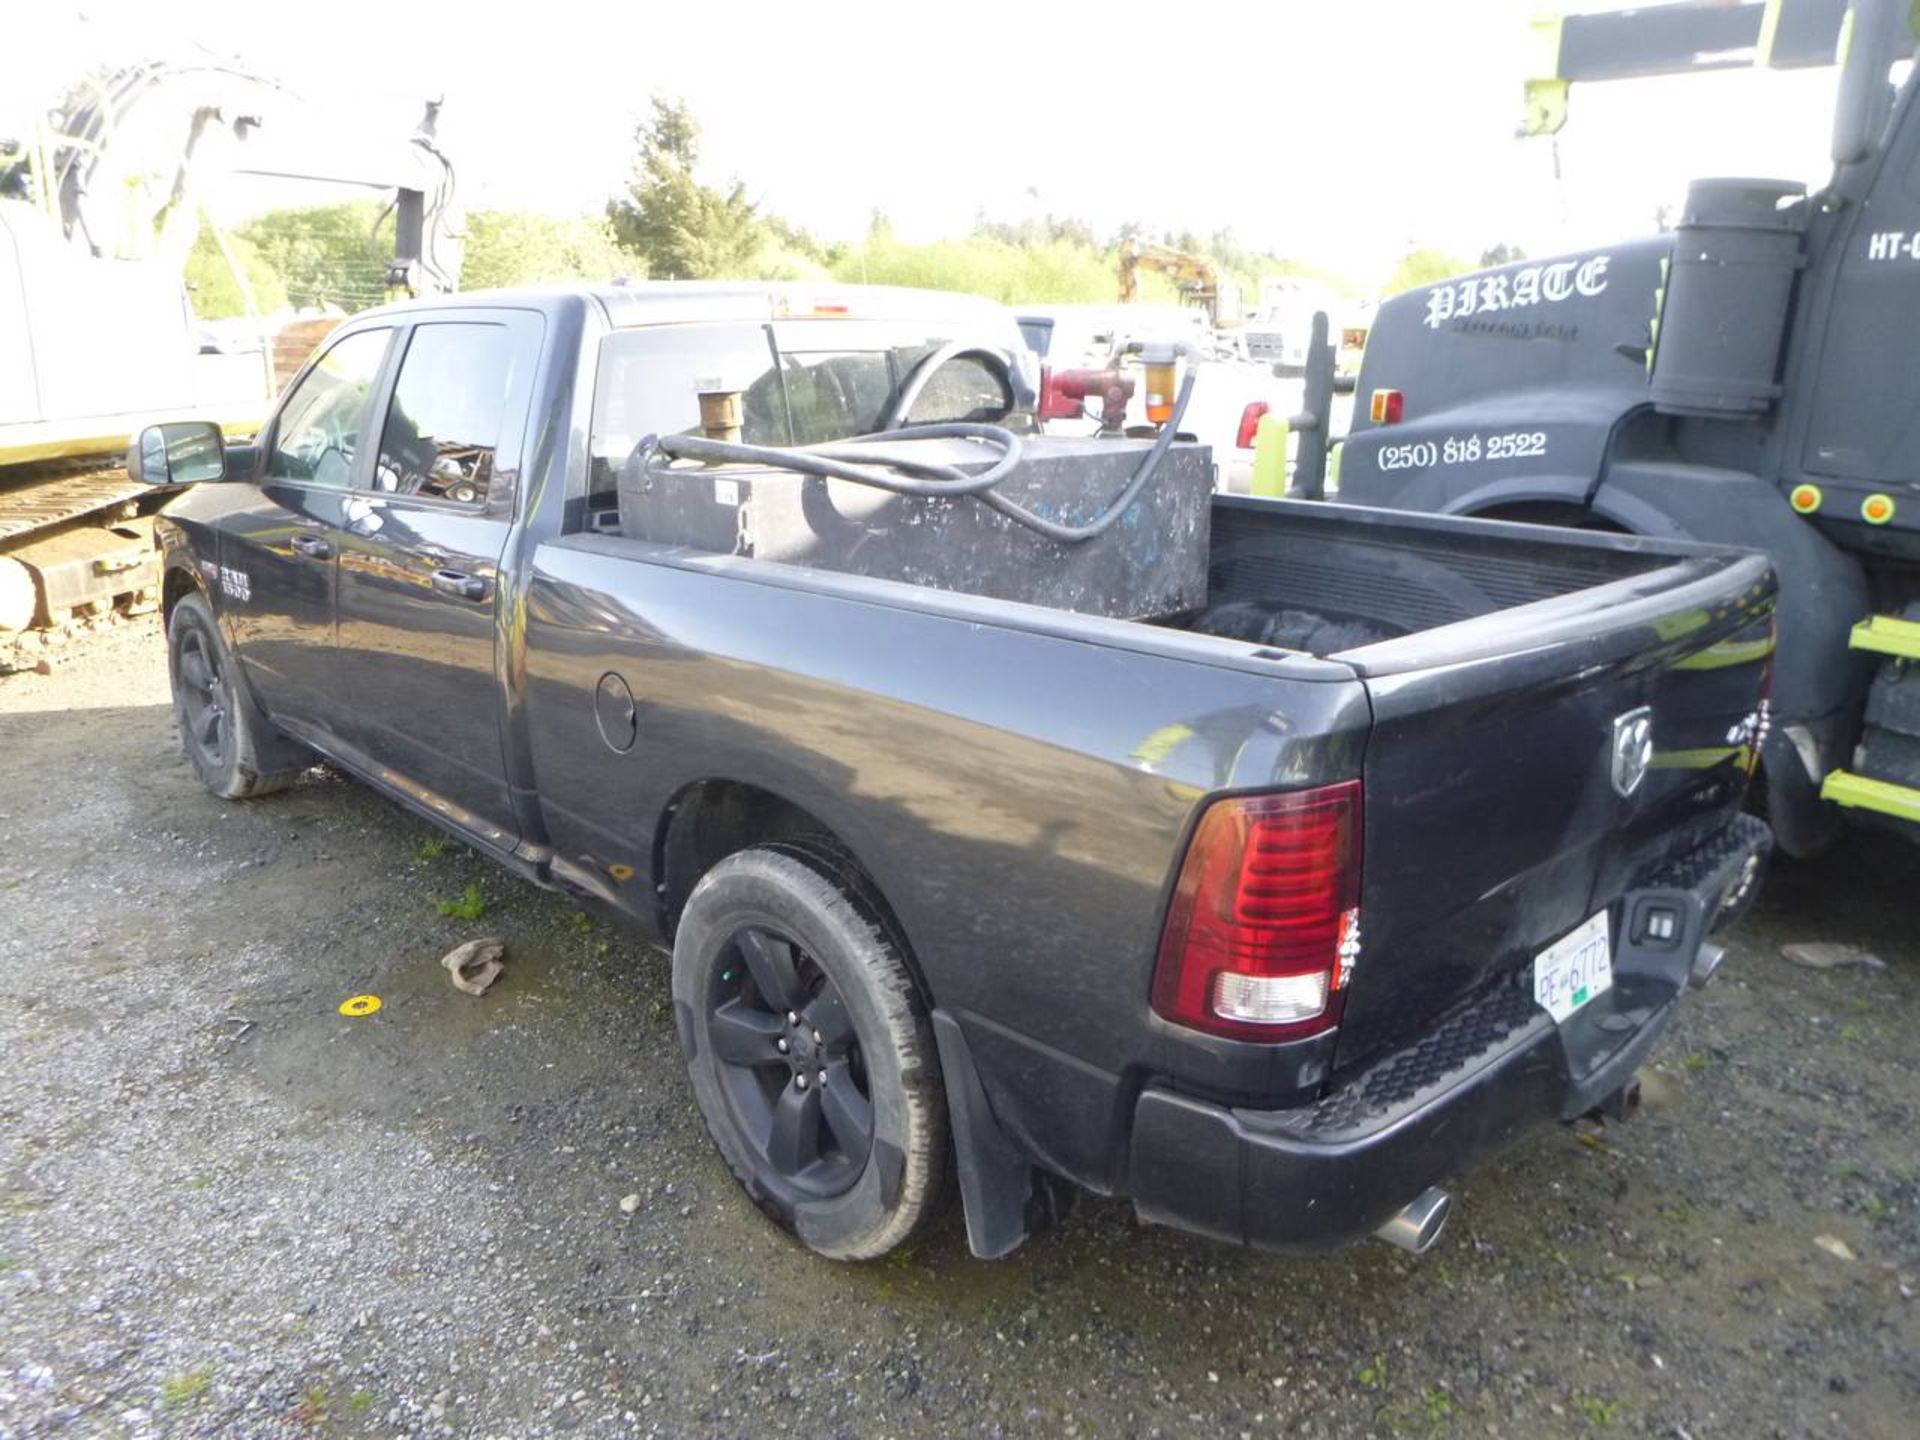 2014 Dodge Ram 1500 Pick up truck - Image 4 of 7